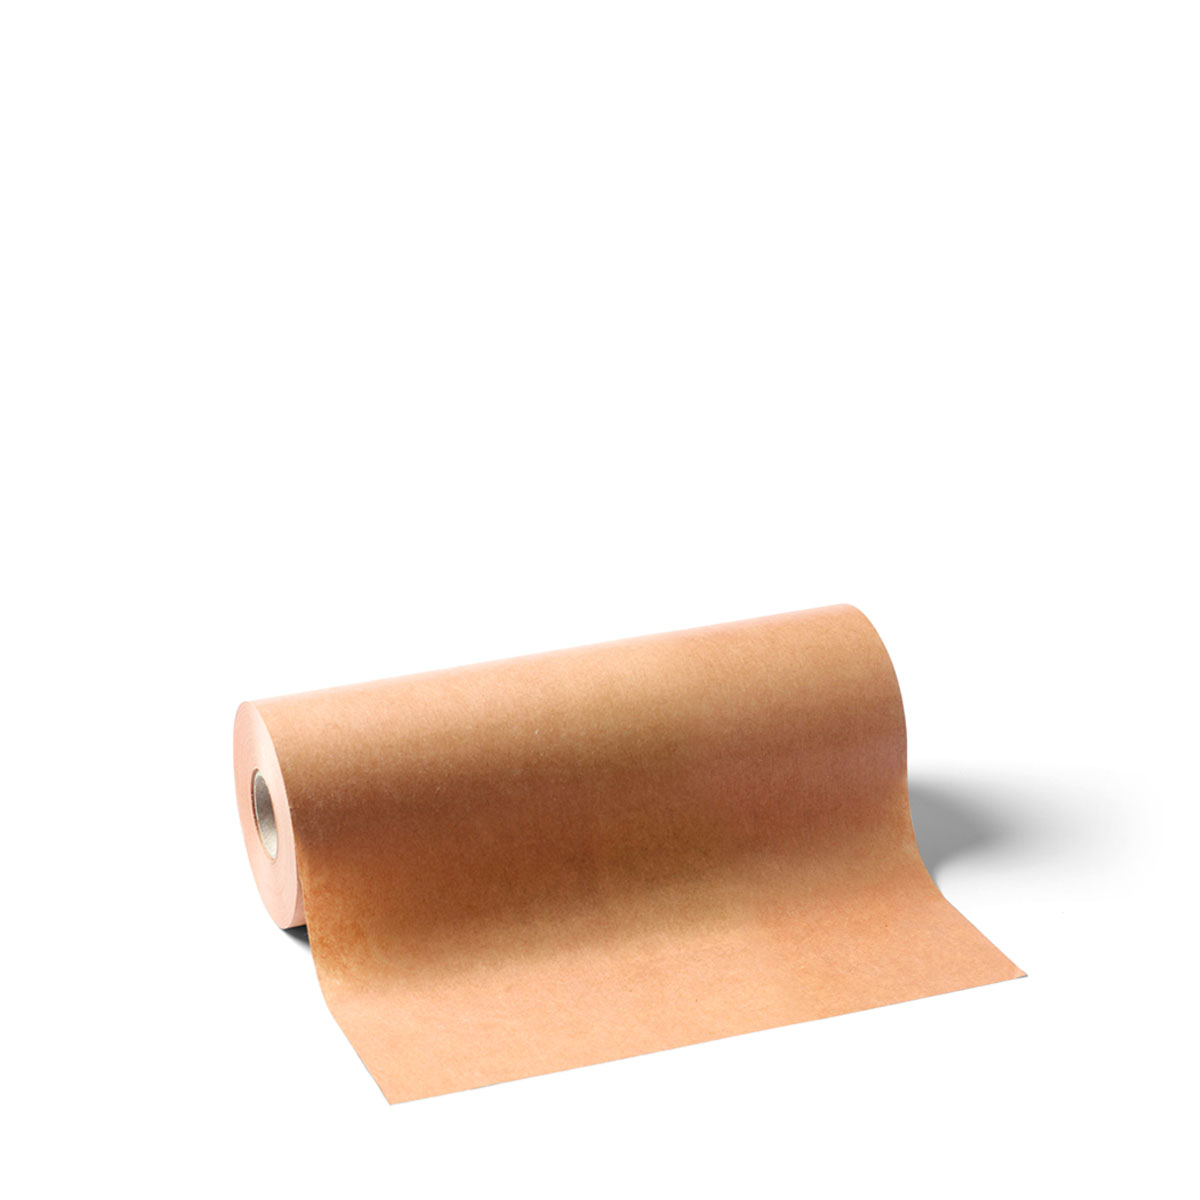 Schuller selbstklebendes Abdeckpapier 150mmx50m Paper Protect #46003